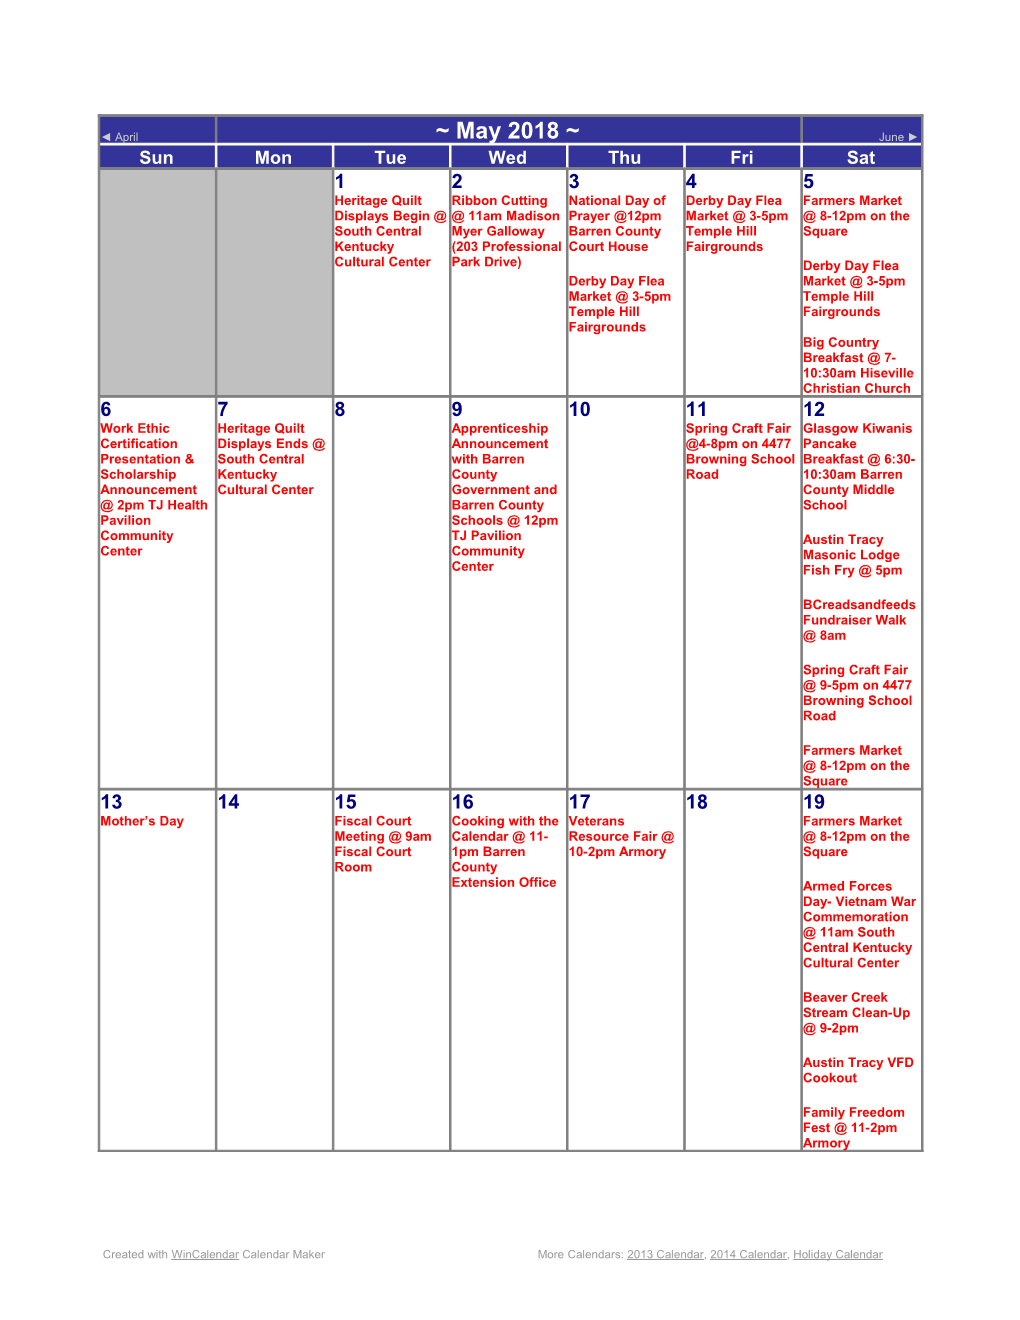 Created with Wincalendar Calendar Makermore Calendars: 2013 Calendar, 2014 Calendar, Holiday